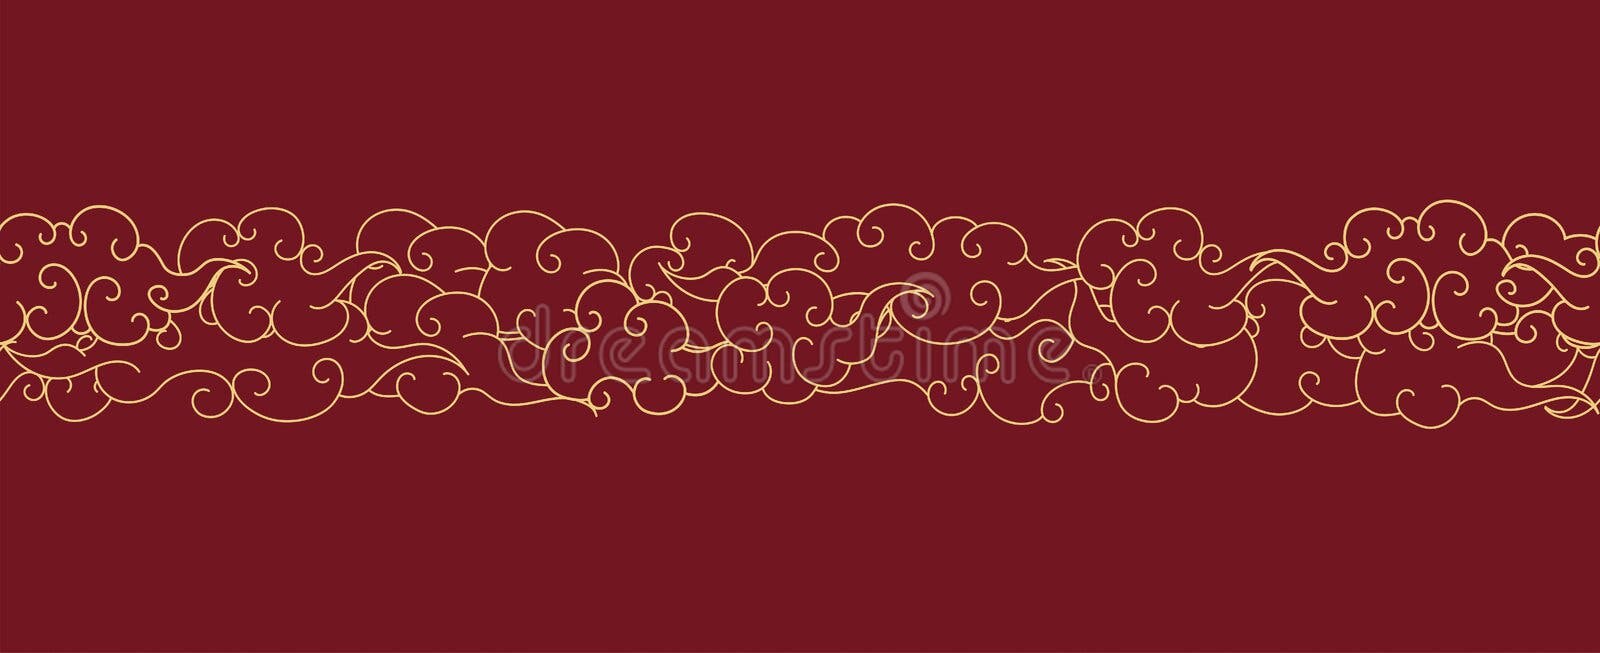 estilo elegante de símbolo de vetor de nuvem tibetana 7224862 Vetor no  Vecteezy